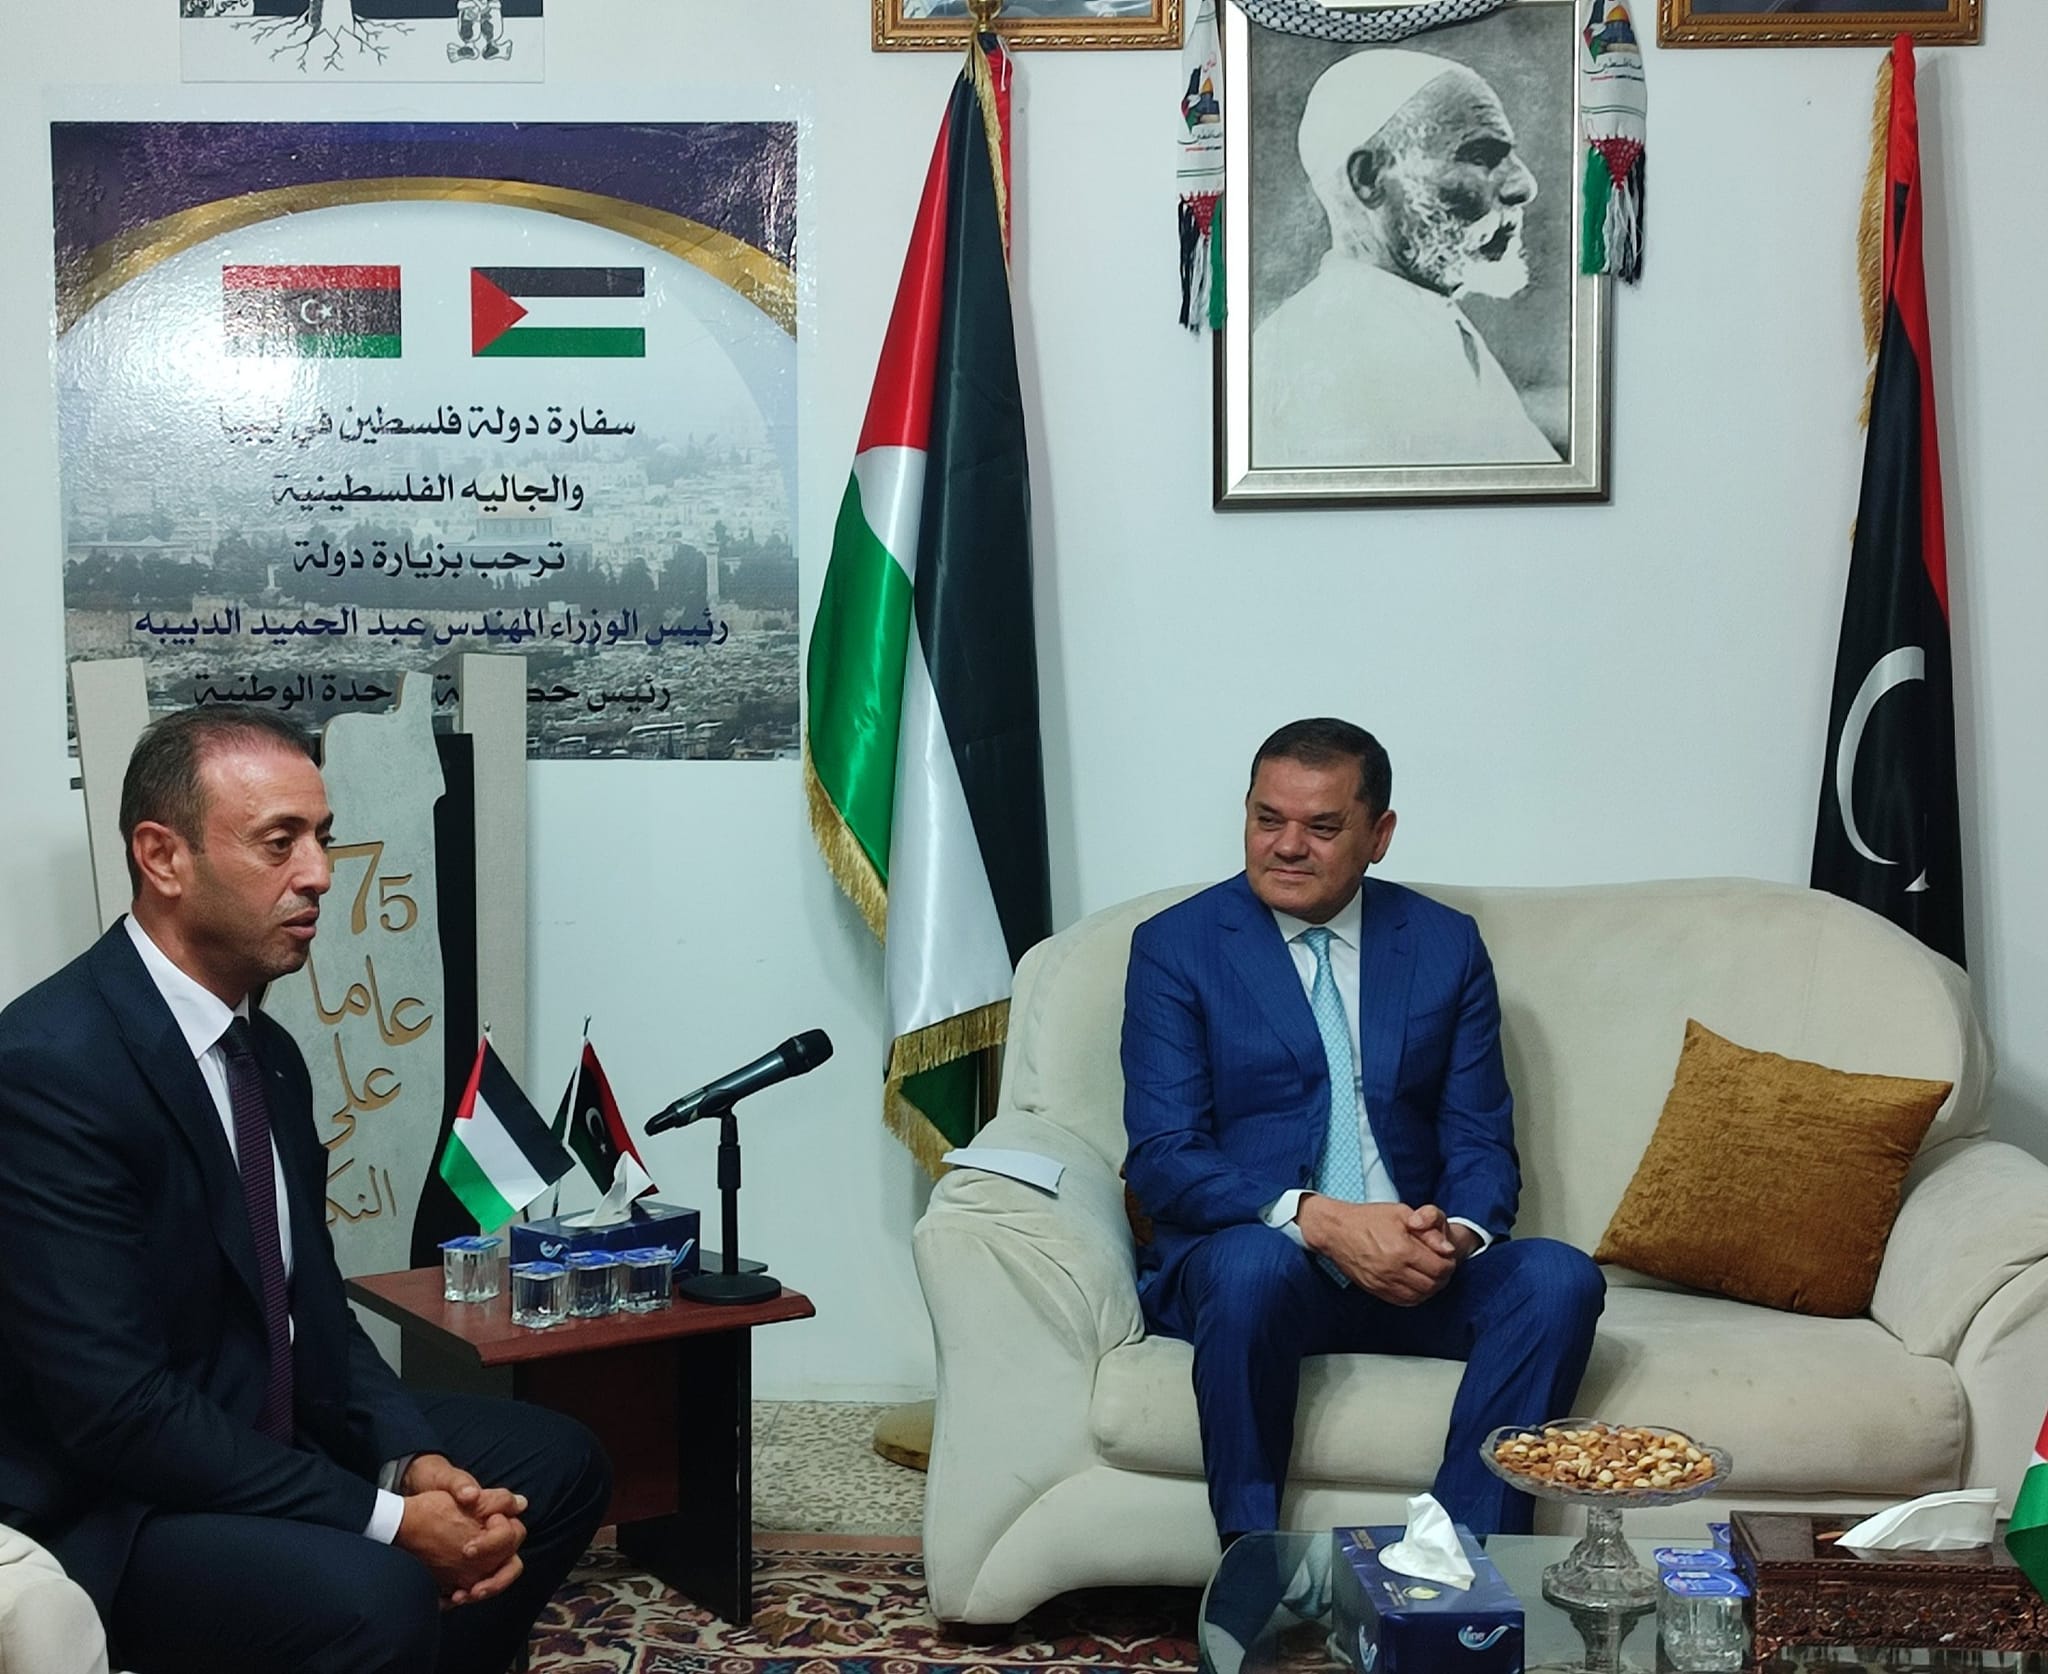 During his visit to the Palestinian embassy. Al-Dabaiba confirms the dismissal of Al-Mangoush.